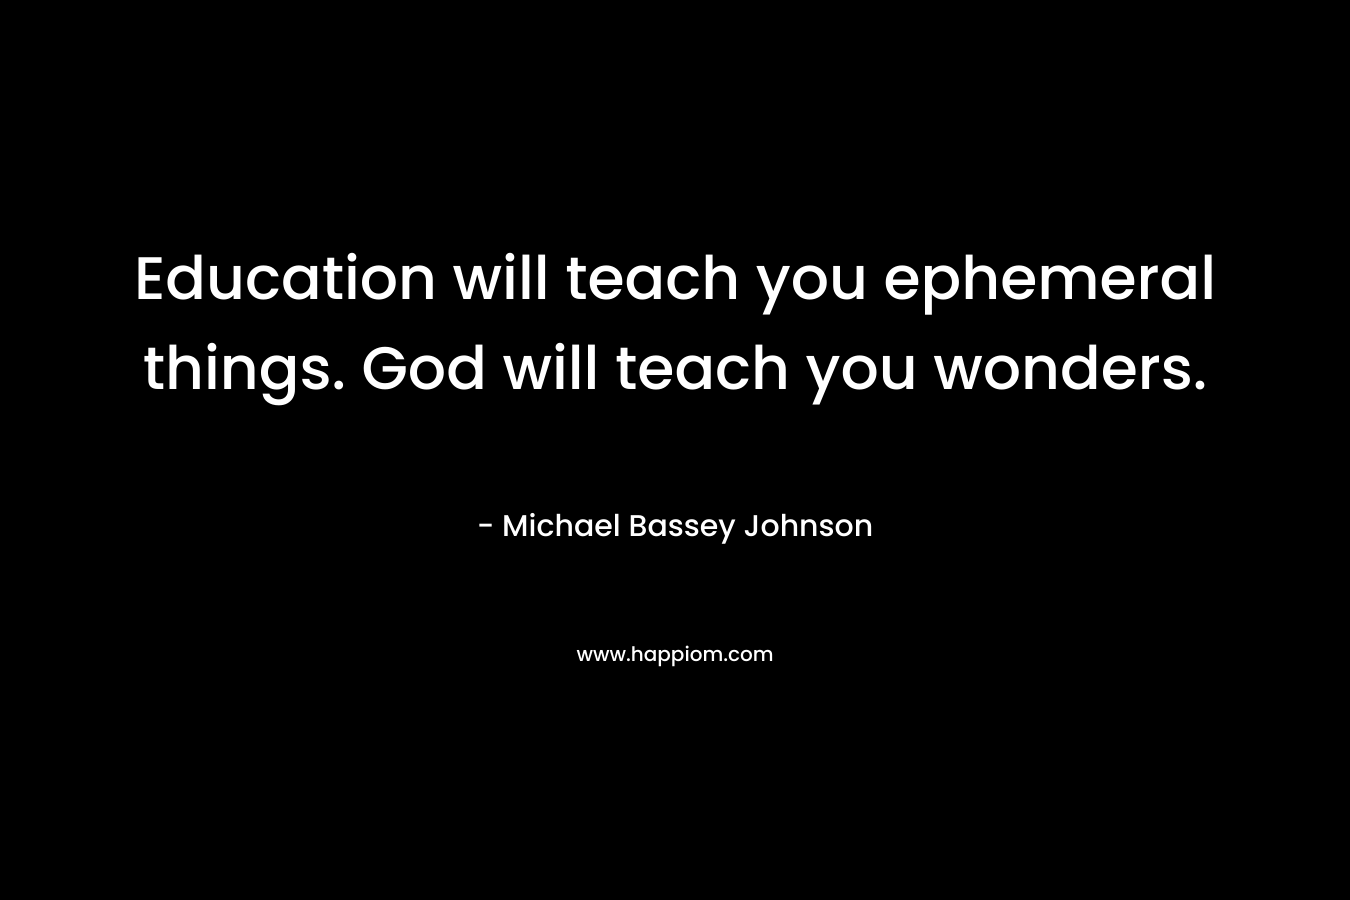 Education will teach you ephemeral things. God will teach you wonders.